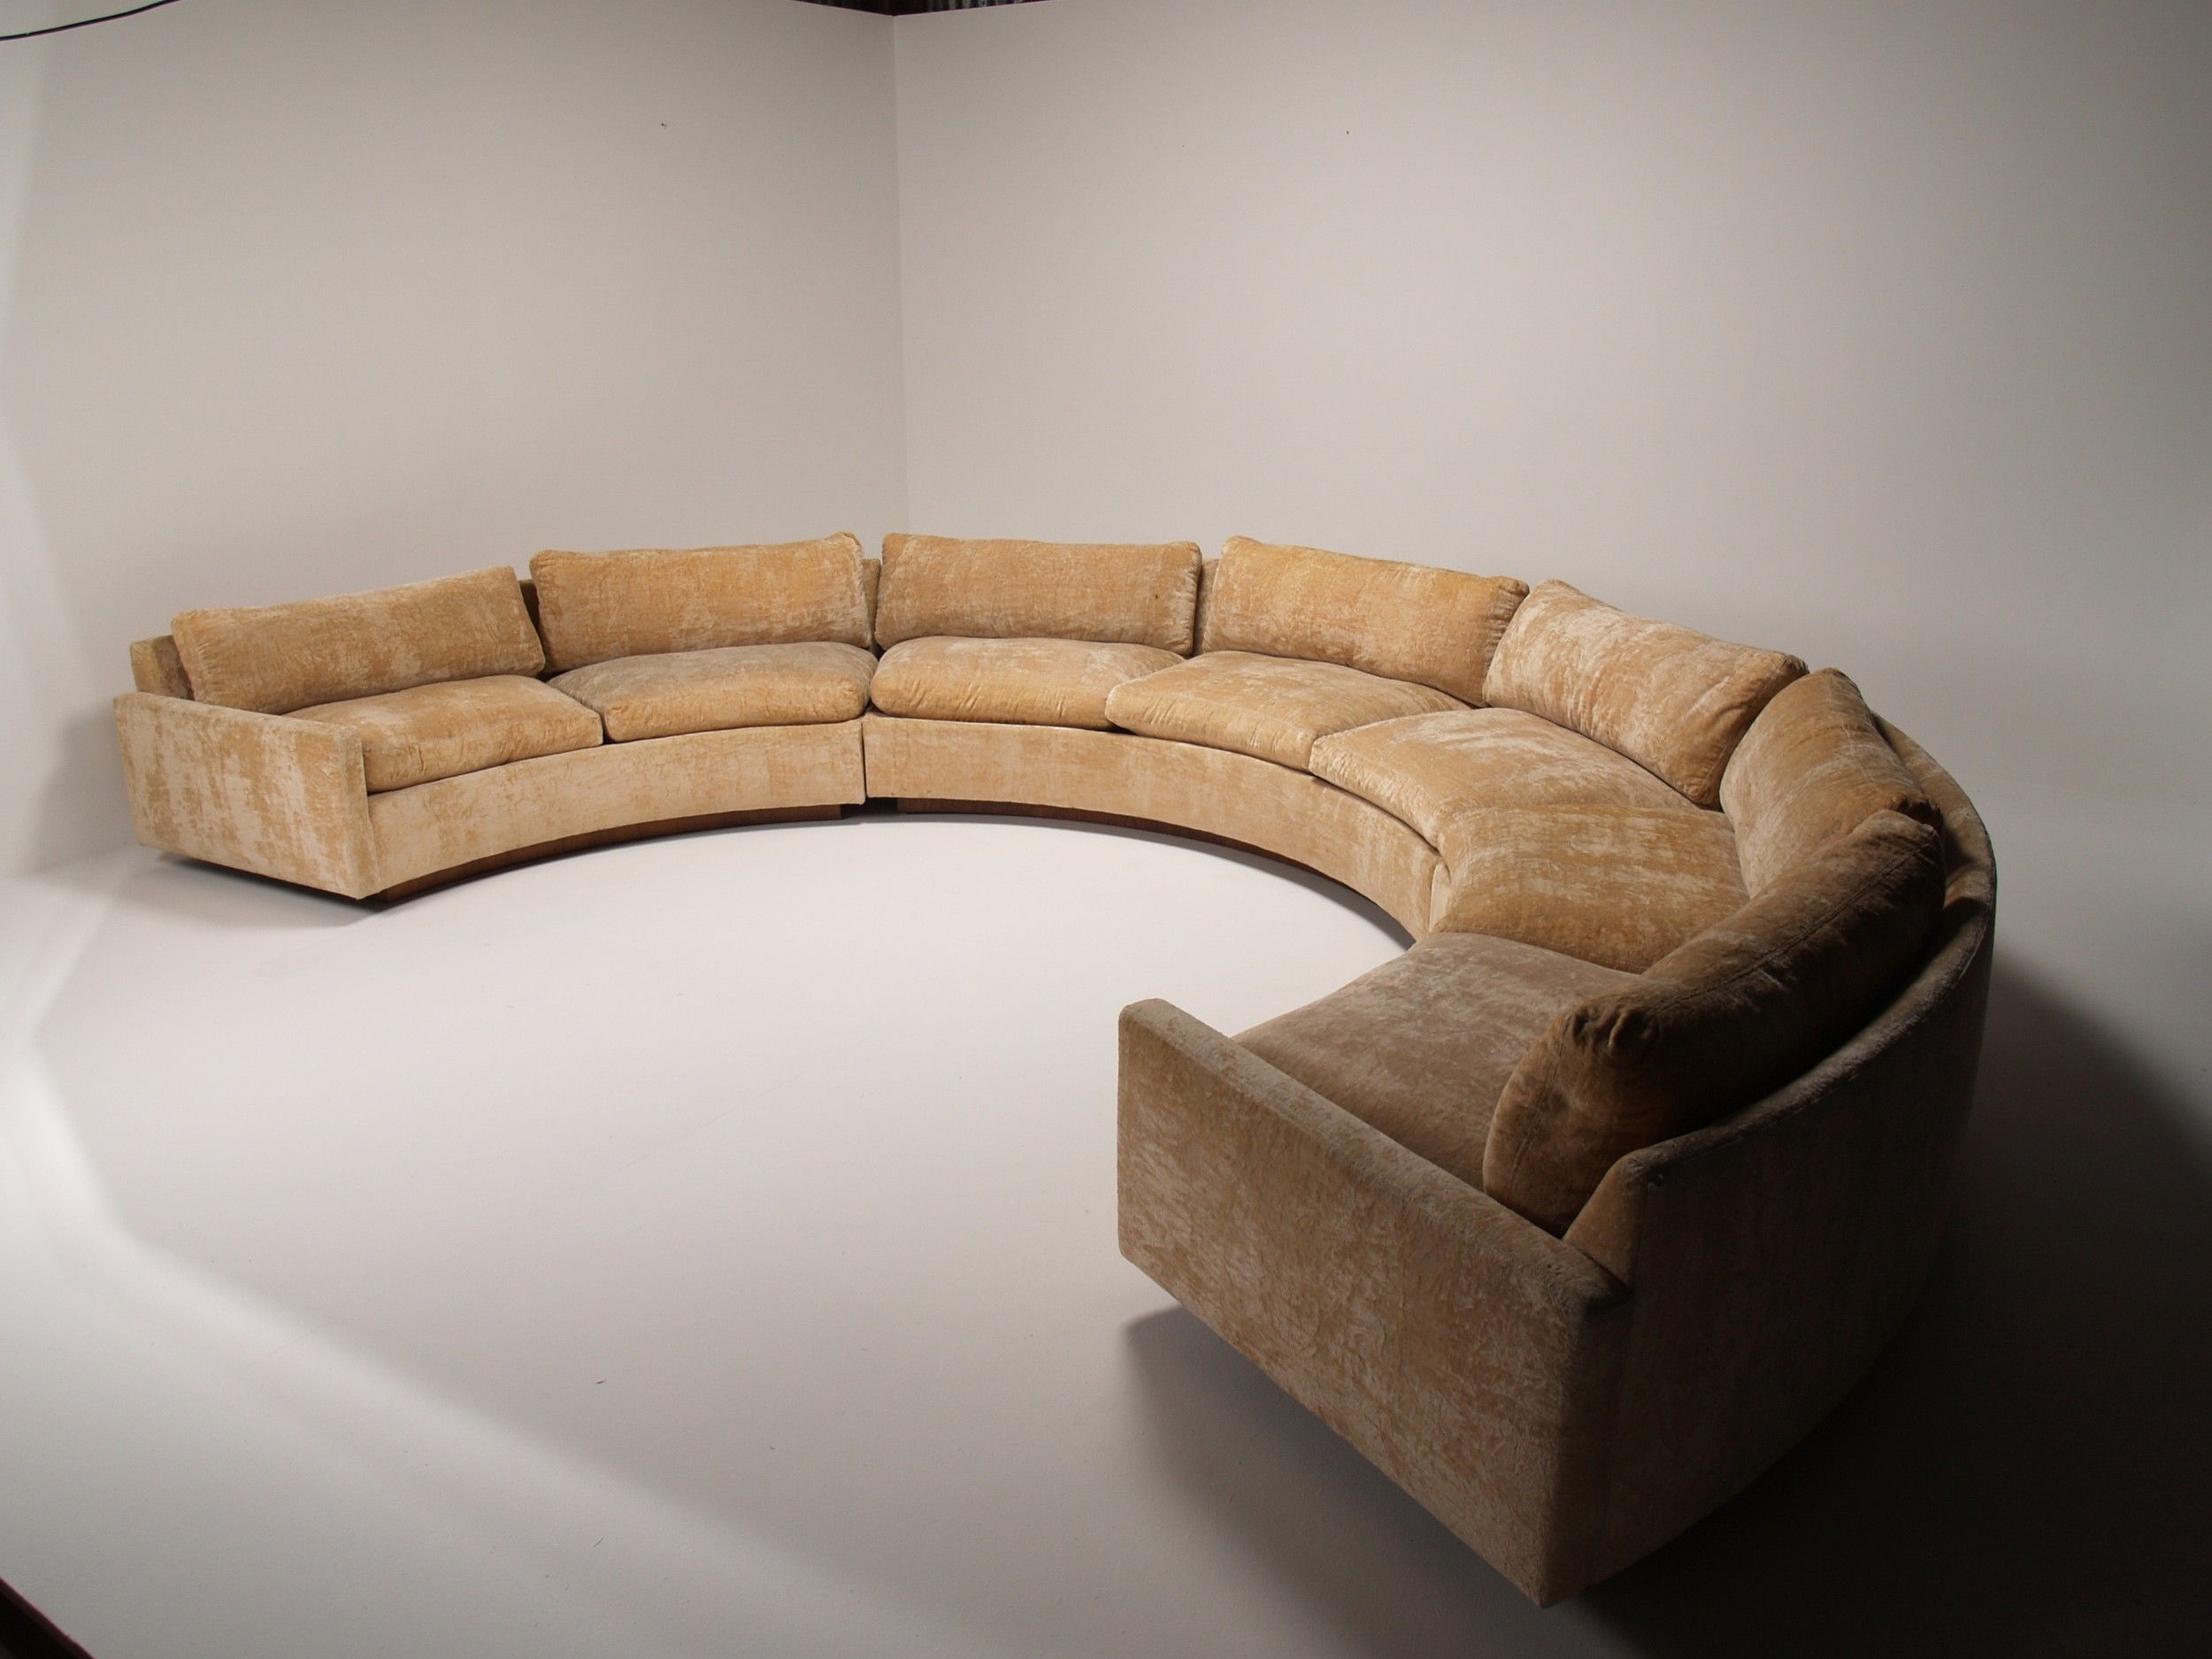 Fabulous Ccdeeaefeccedc Has Cool Sofa Ideas On Home Design Ideas Regarding Cool Sofa Ideas (Photo 2 of 12)